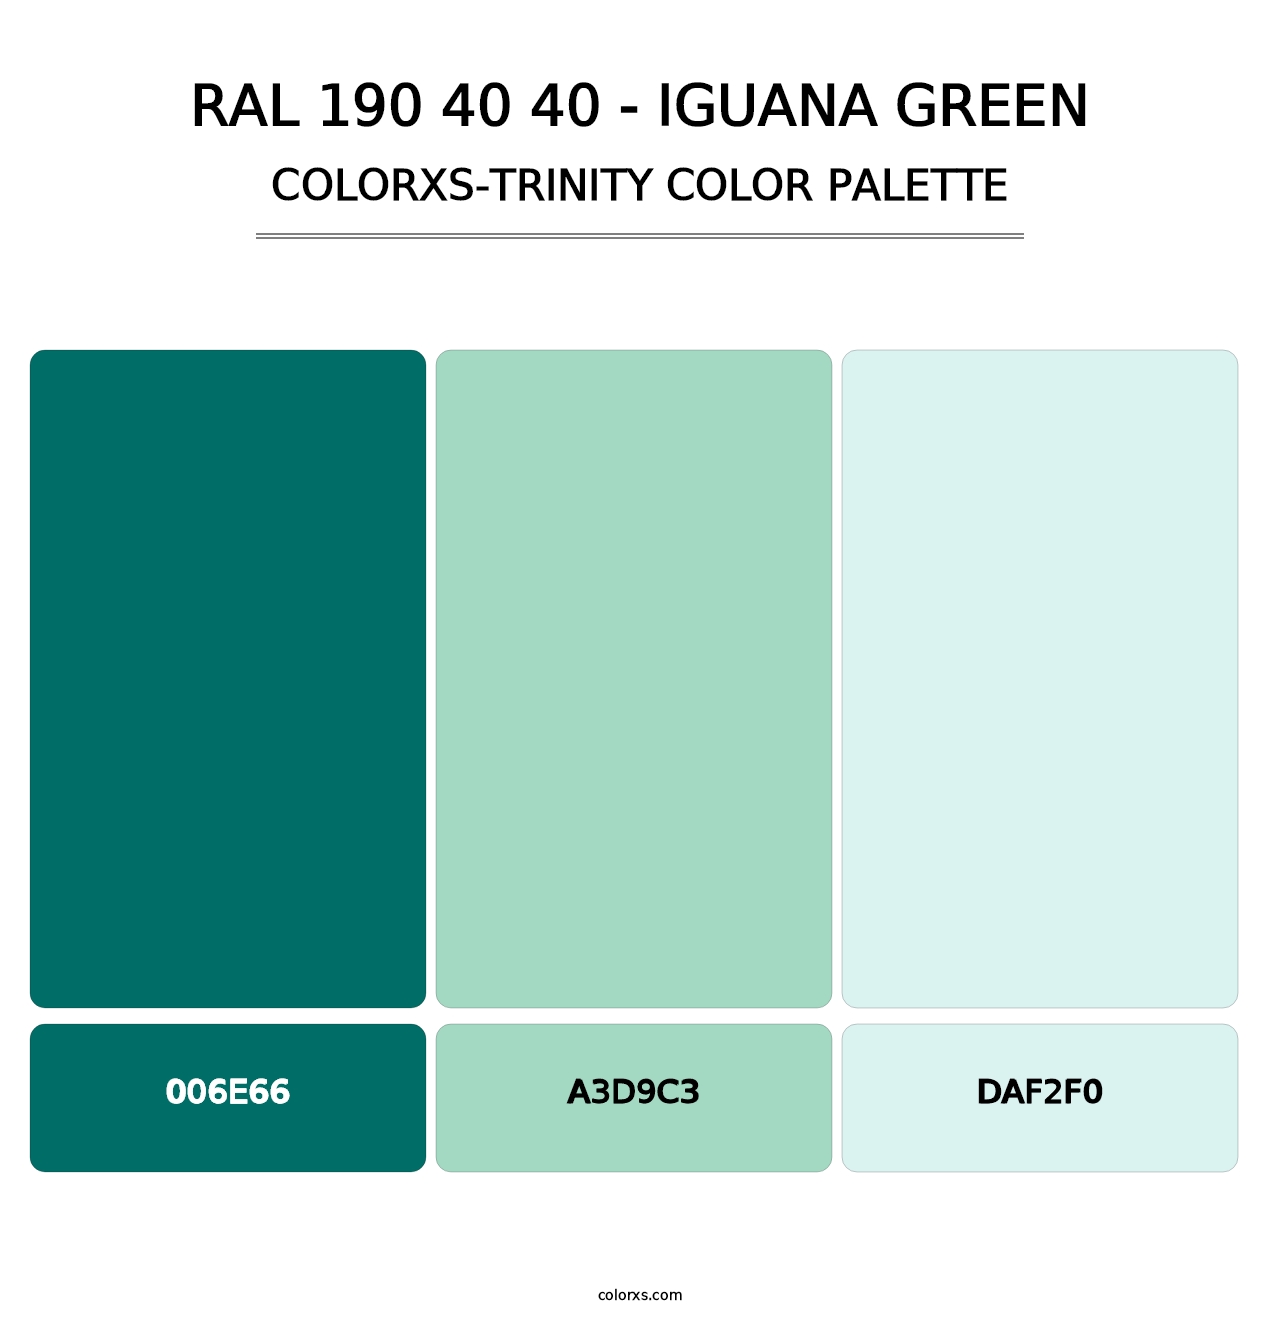 RAL 190 40 40 - Iguana Green - Colorxs Trinity Palette